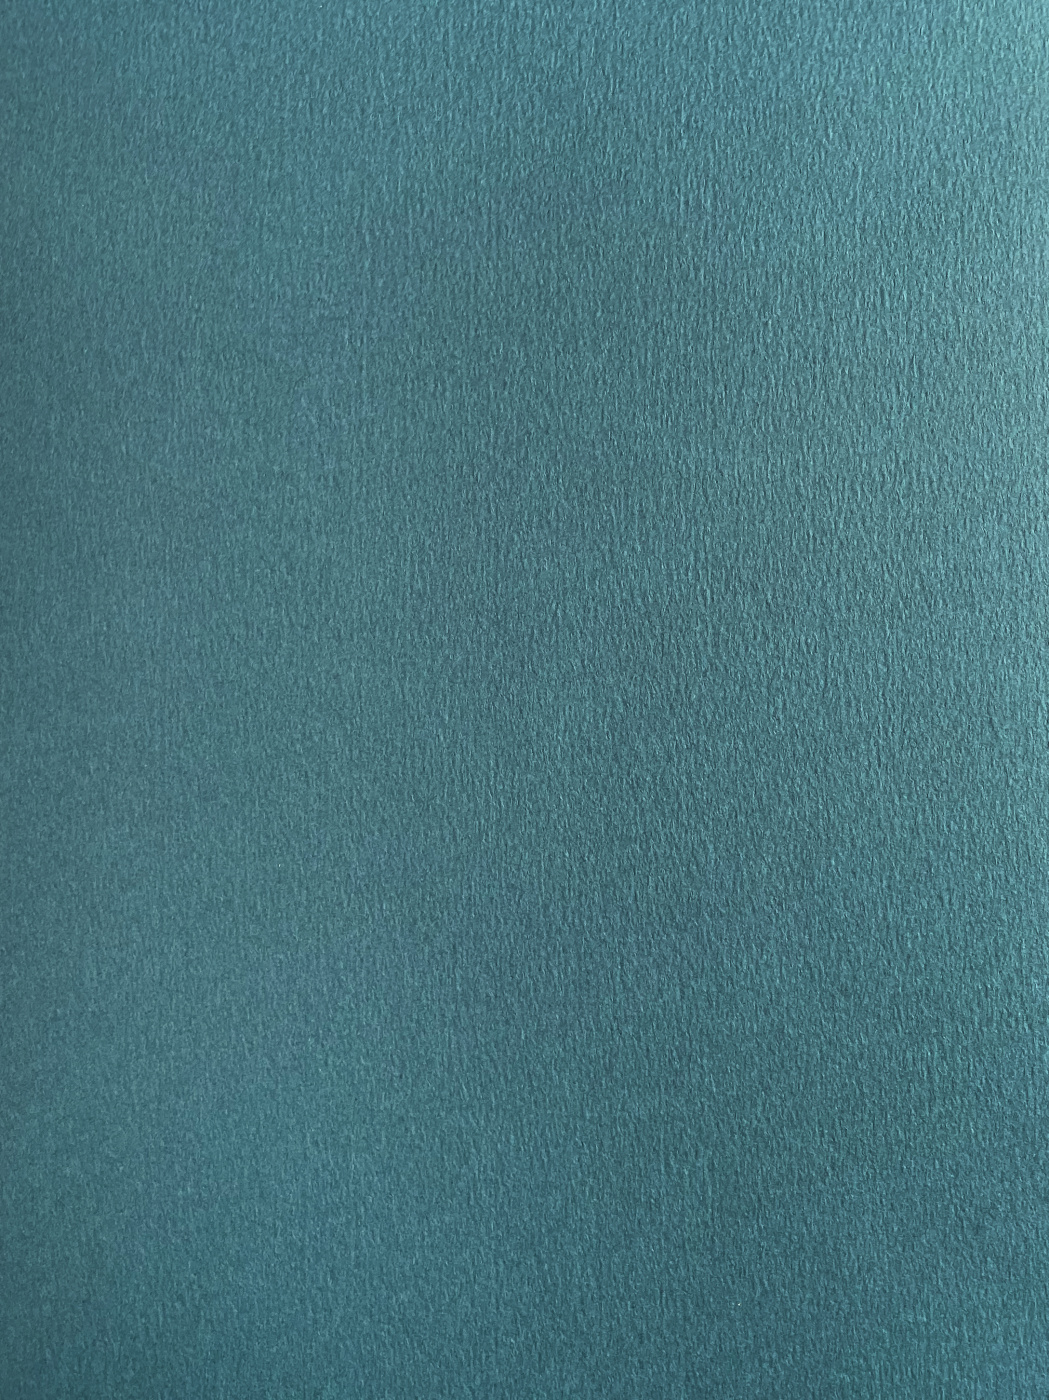 Бумага для пастели Малевичъ GrafArt А4 270 г, морская волна бумага для декора и флористики крафт коричневая однотонная двусторонняя рулон 1шт 0 72 x 50 м